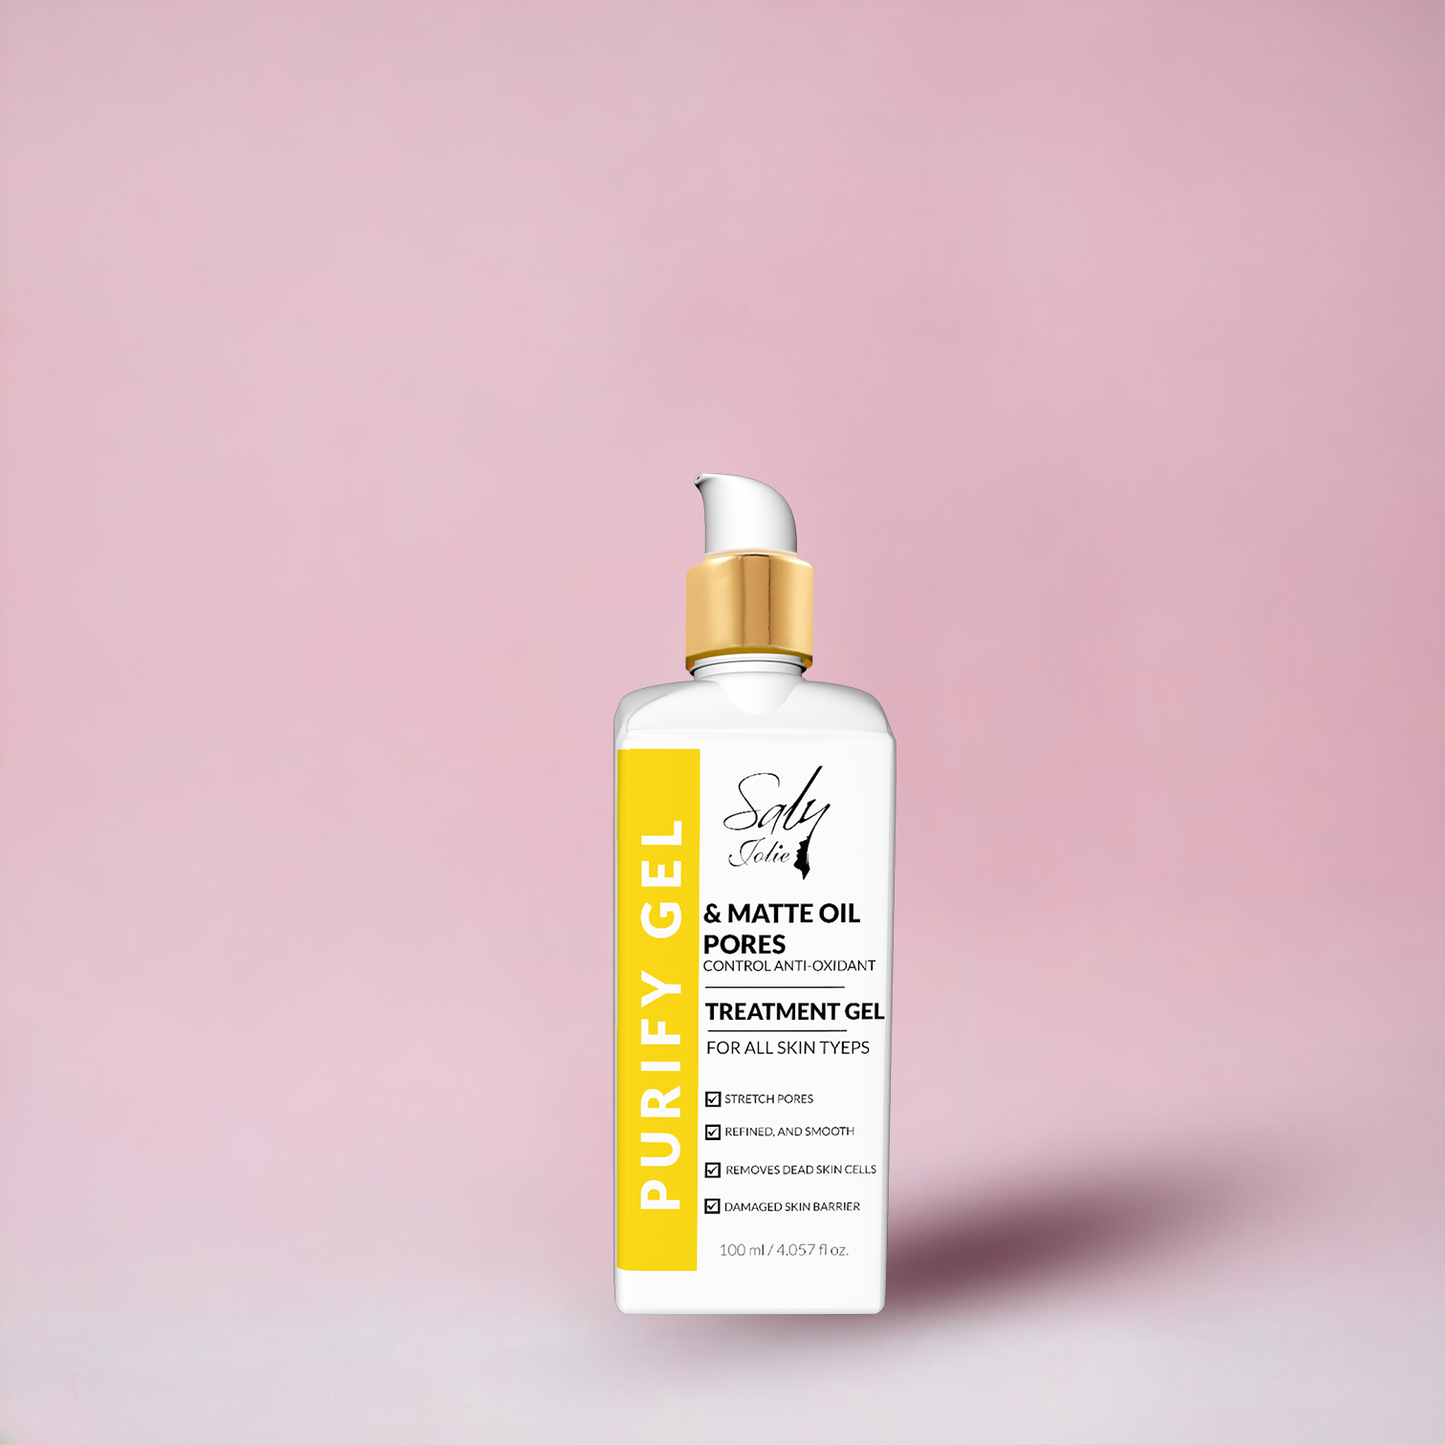 Matte Oil & pores Control Anti-Oxidant treatment set Gel Crème +serum for Oily Skin